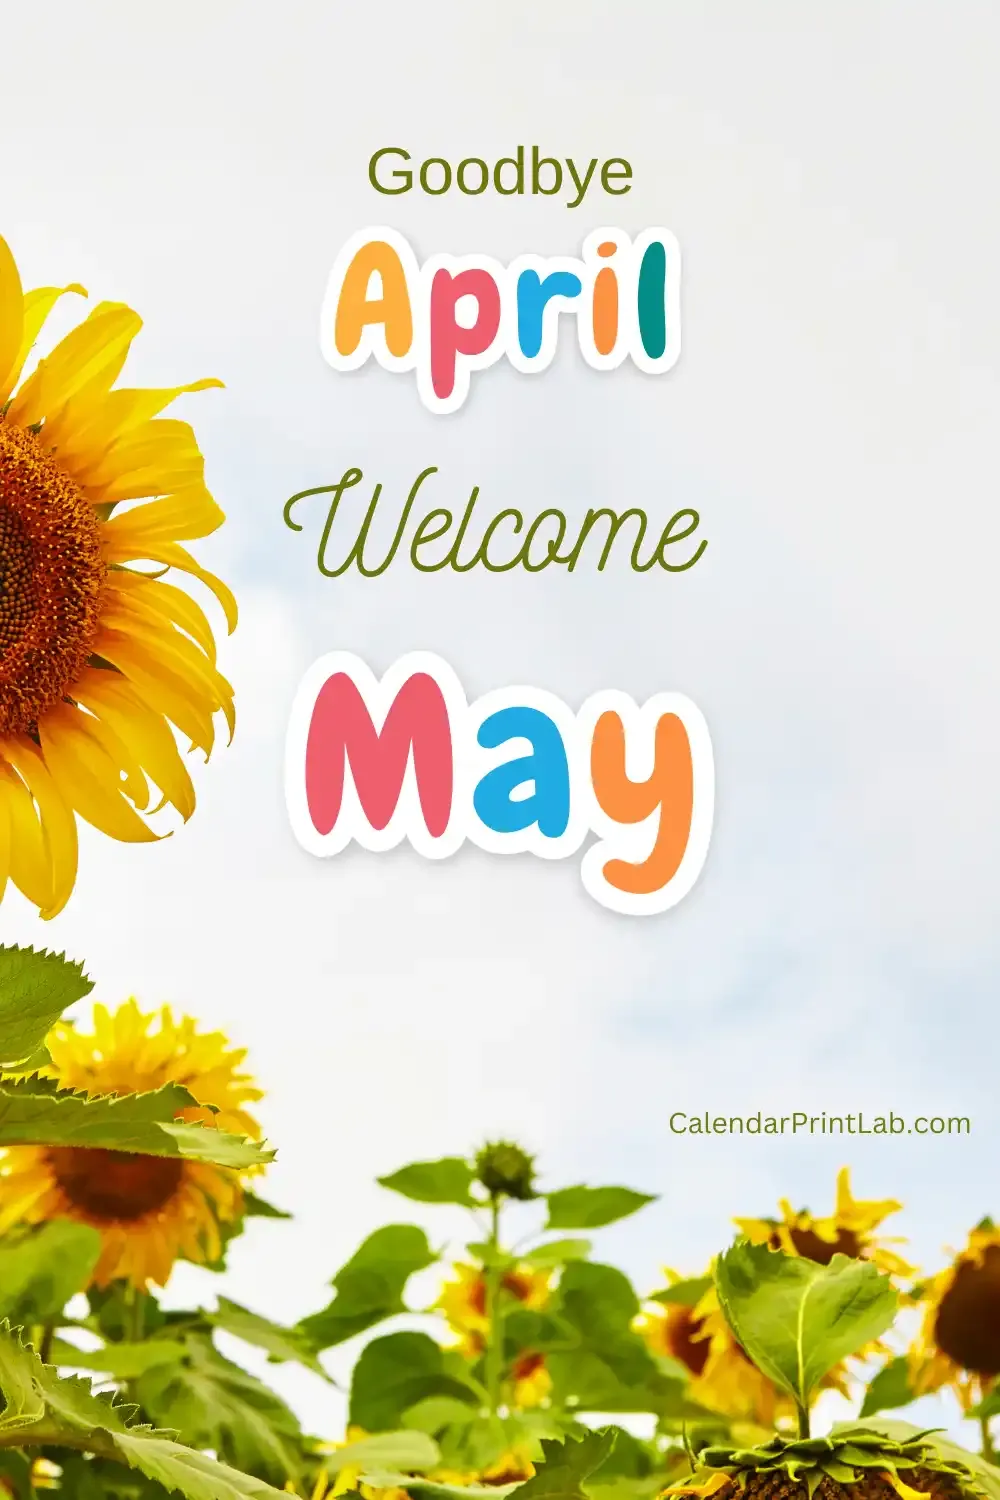 Goodbye April Welcome May Image